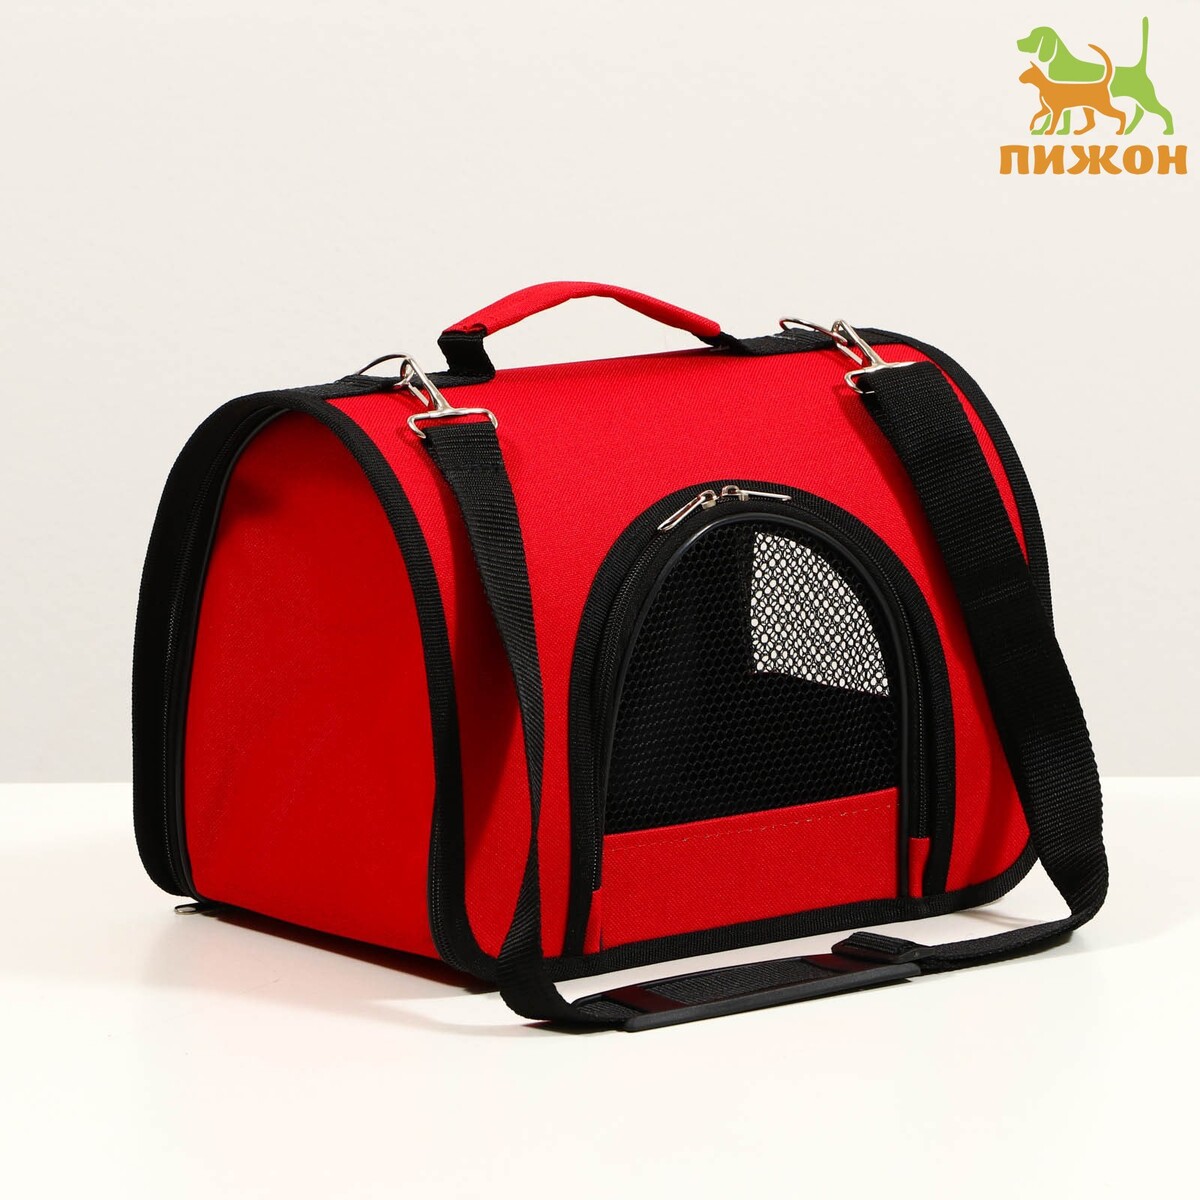 Сумка - переноска для животных, 2 входа, 31 х 20,5 х 23 см, красная сумка переноска для животных полукруглая с карманоми пвх 37 х 18 х 25 см красная